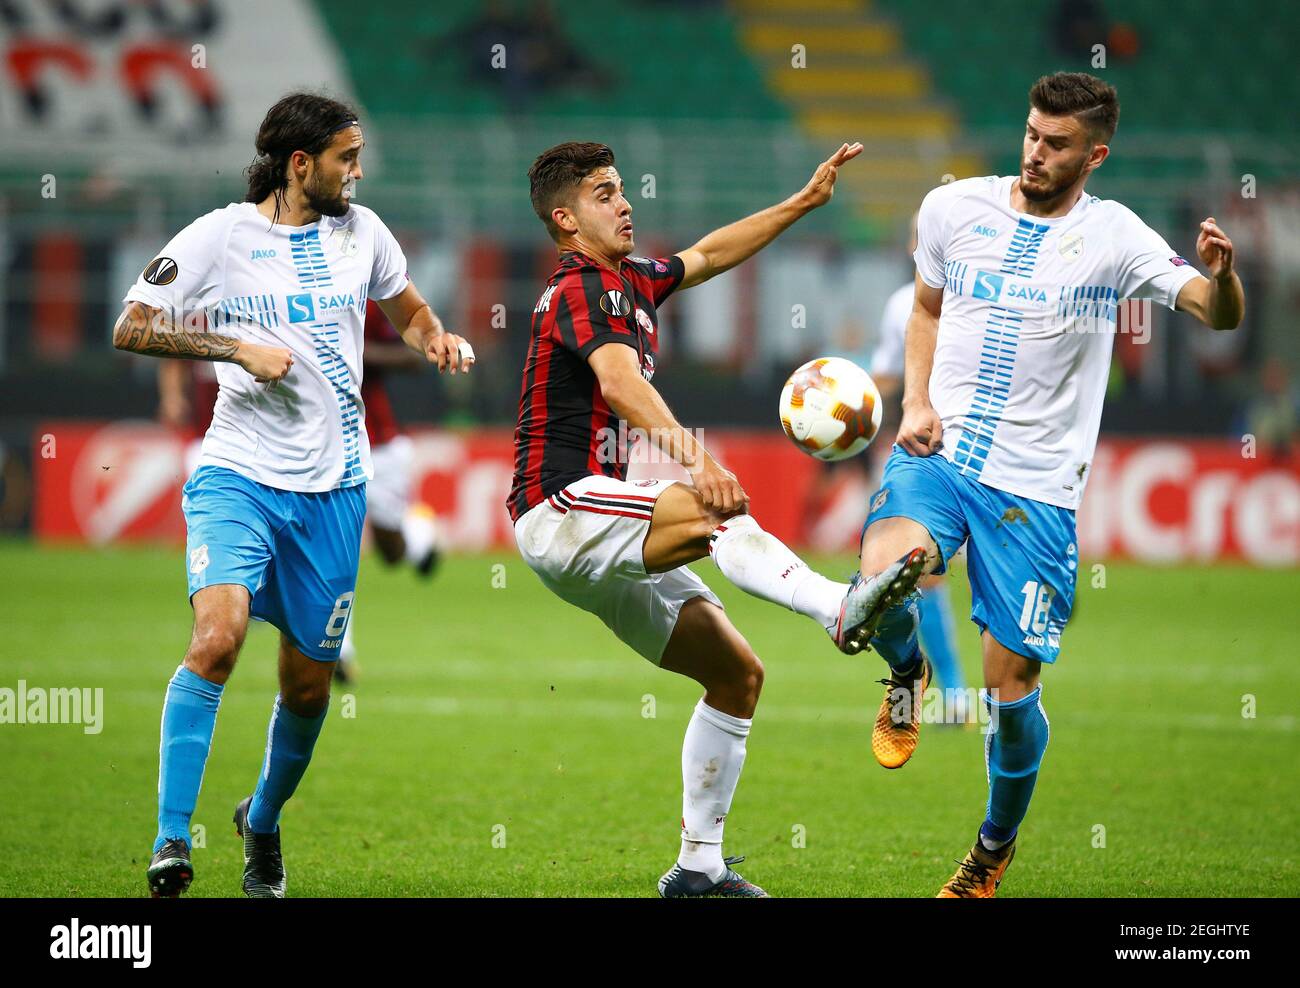 Soccer Football - Europa League - AC Milan vs Rijeka - San Siro, Milan,  Italy - September 28, 2017 Rijeka's